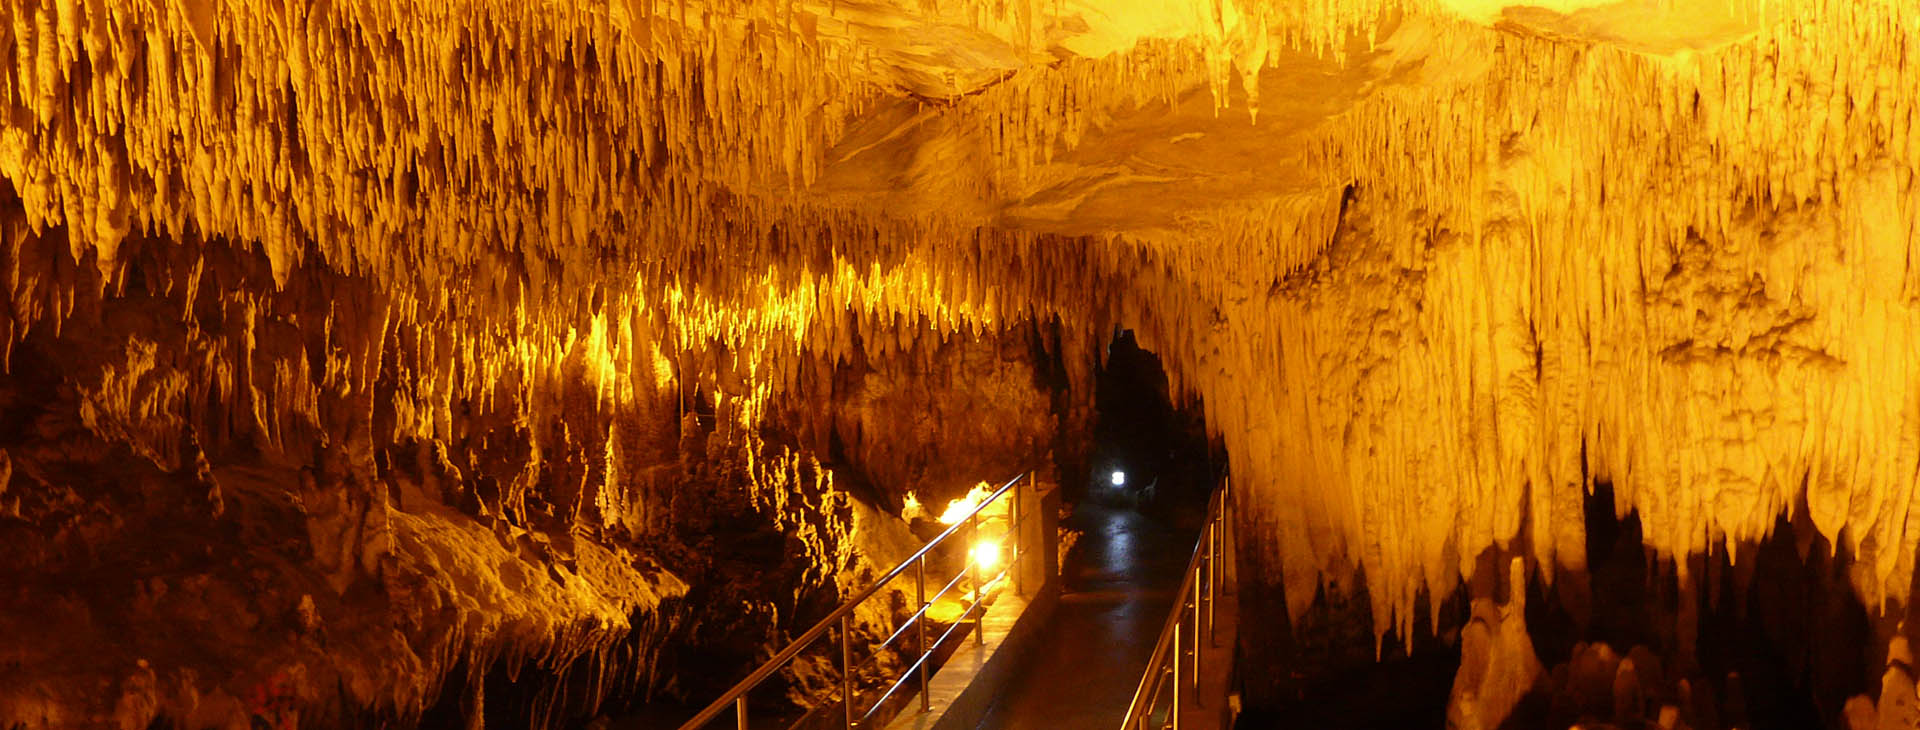 Dragon's Cave, Kastoria